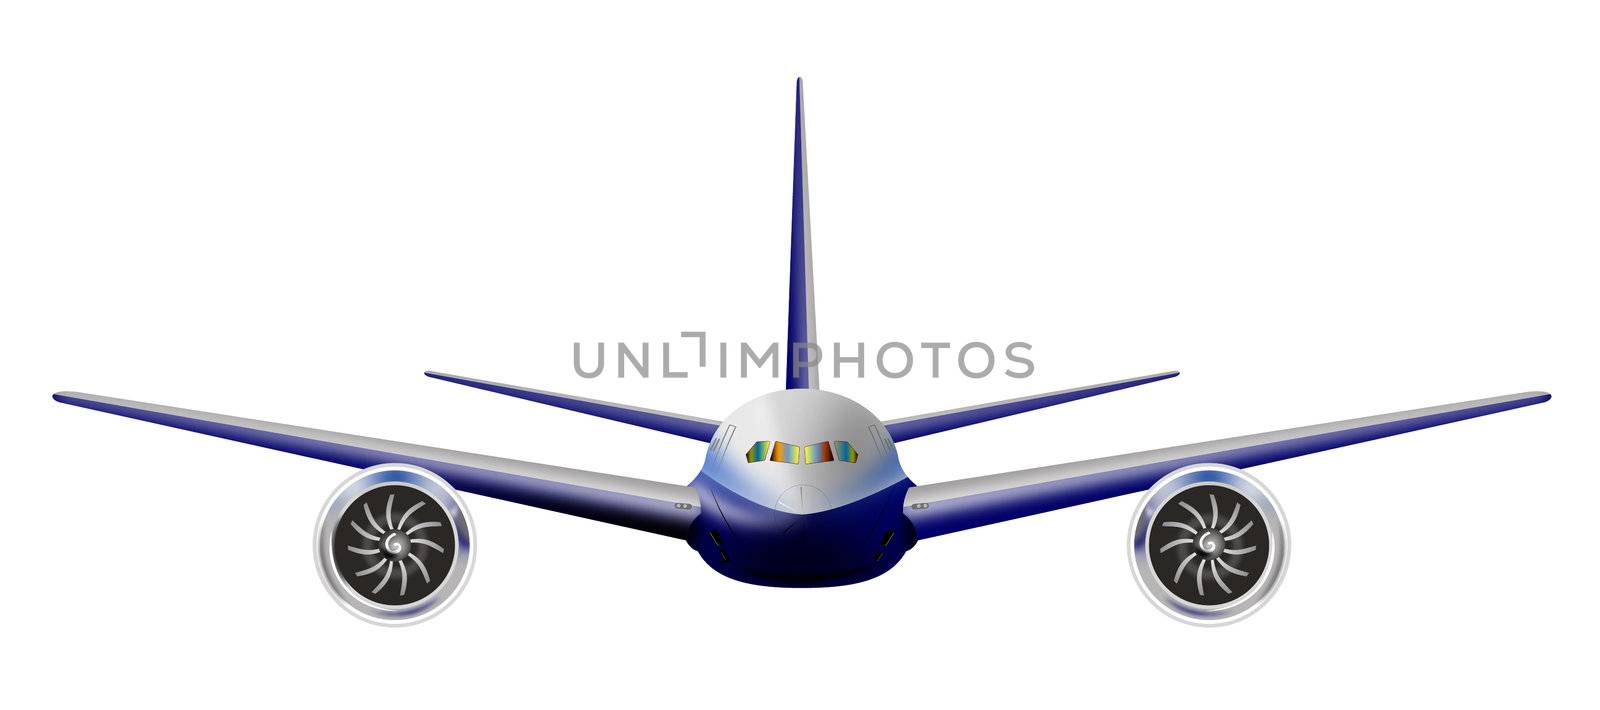 commercial jet plane airliner by patrimonio